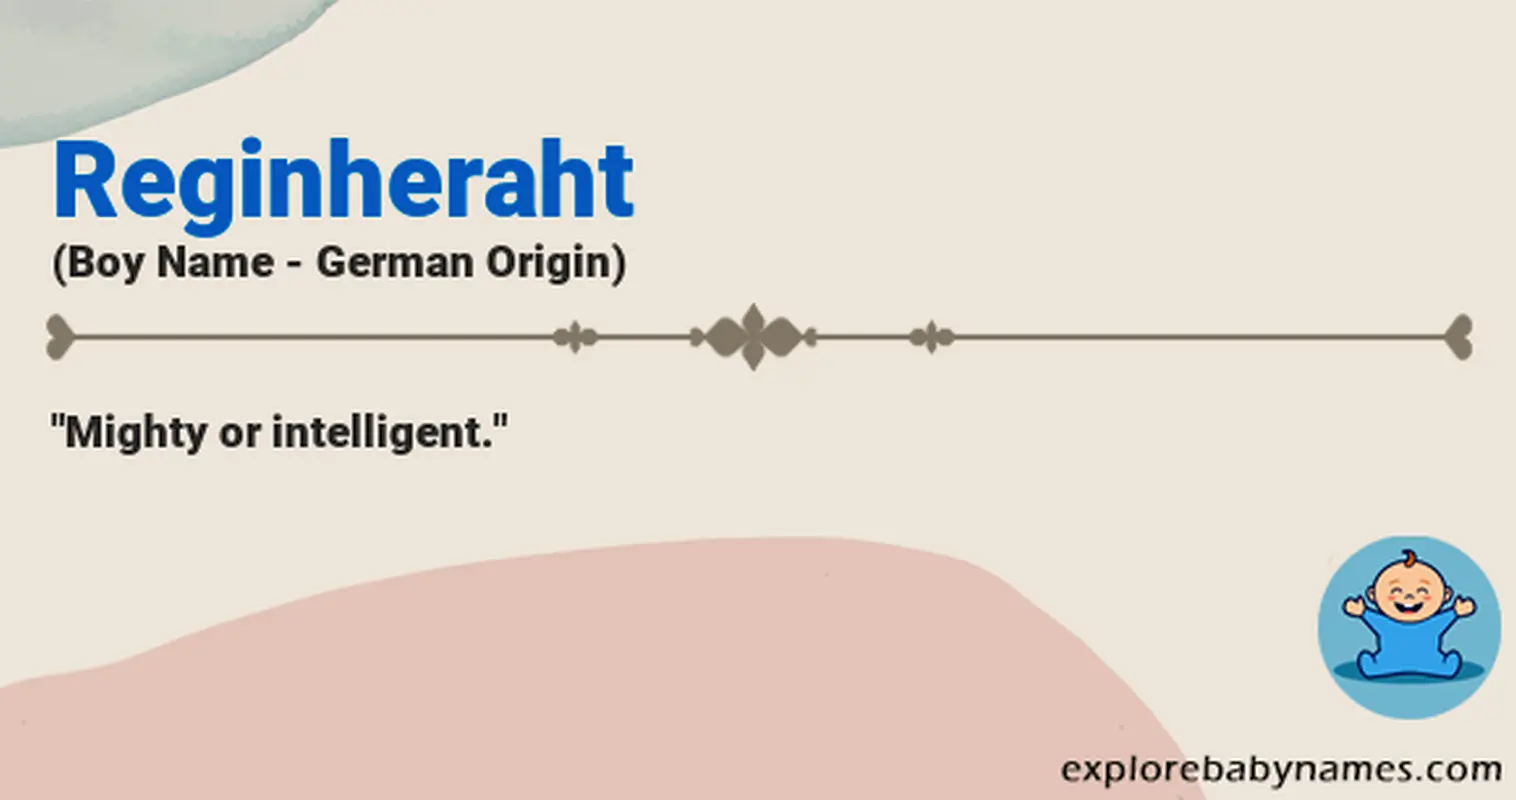 Meaning of Reginheraht